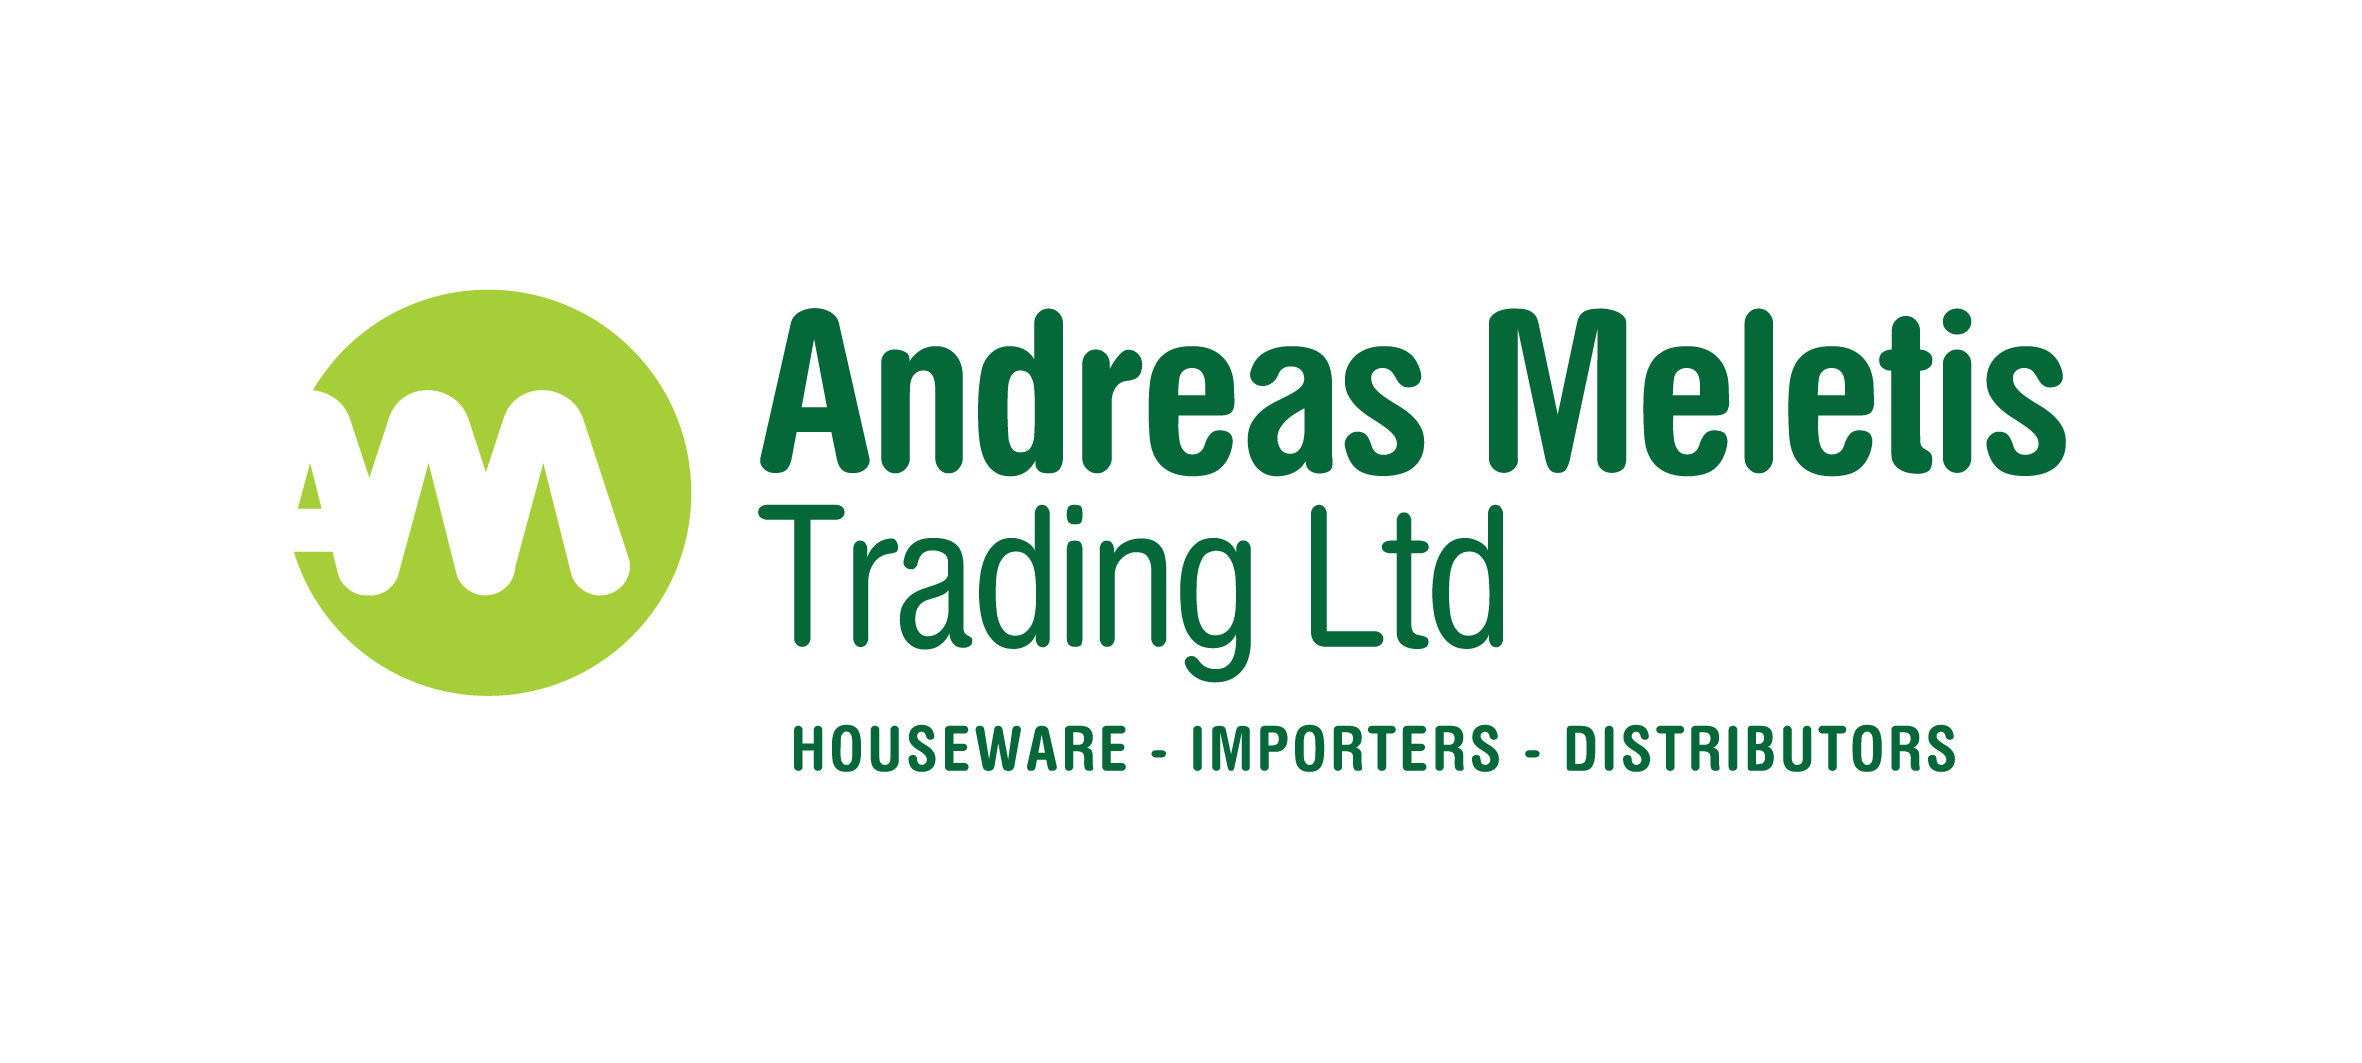 Andreas Meletis Trading Ltd